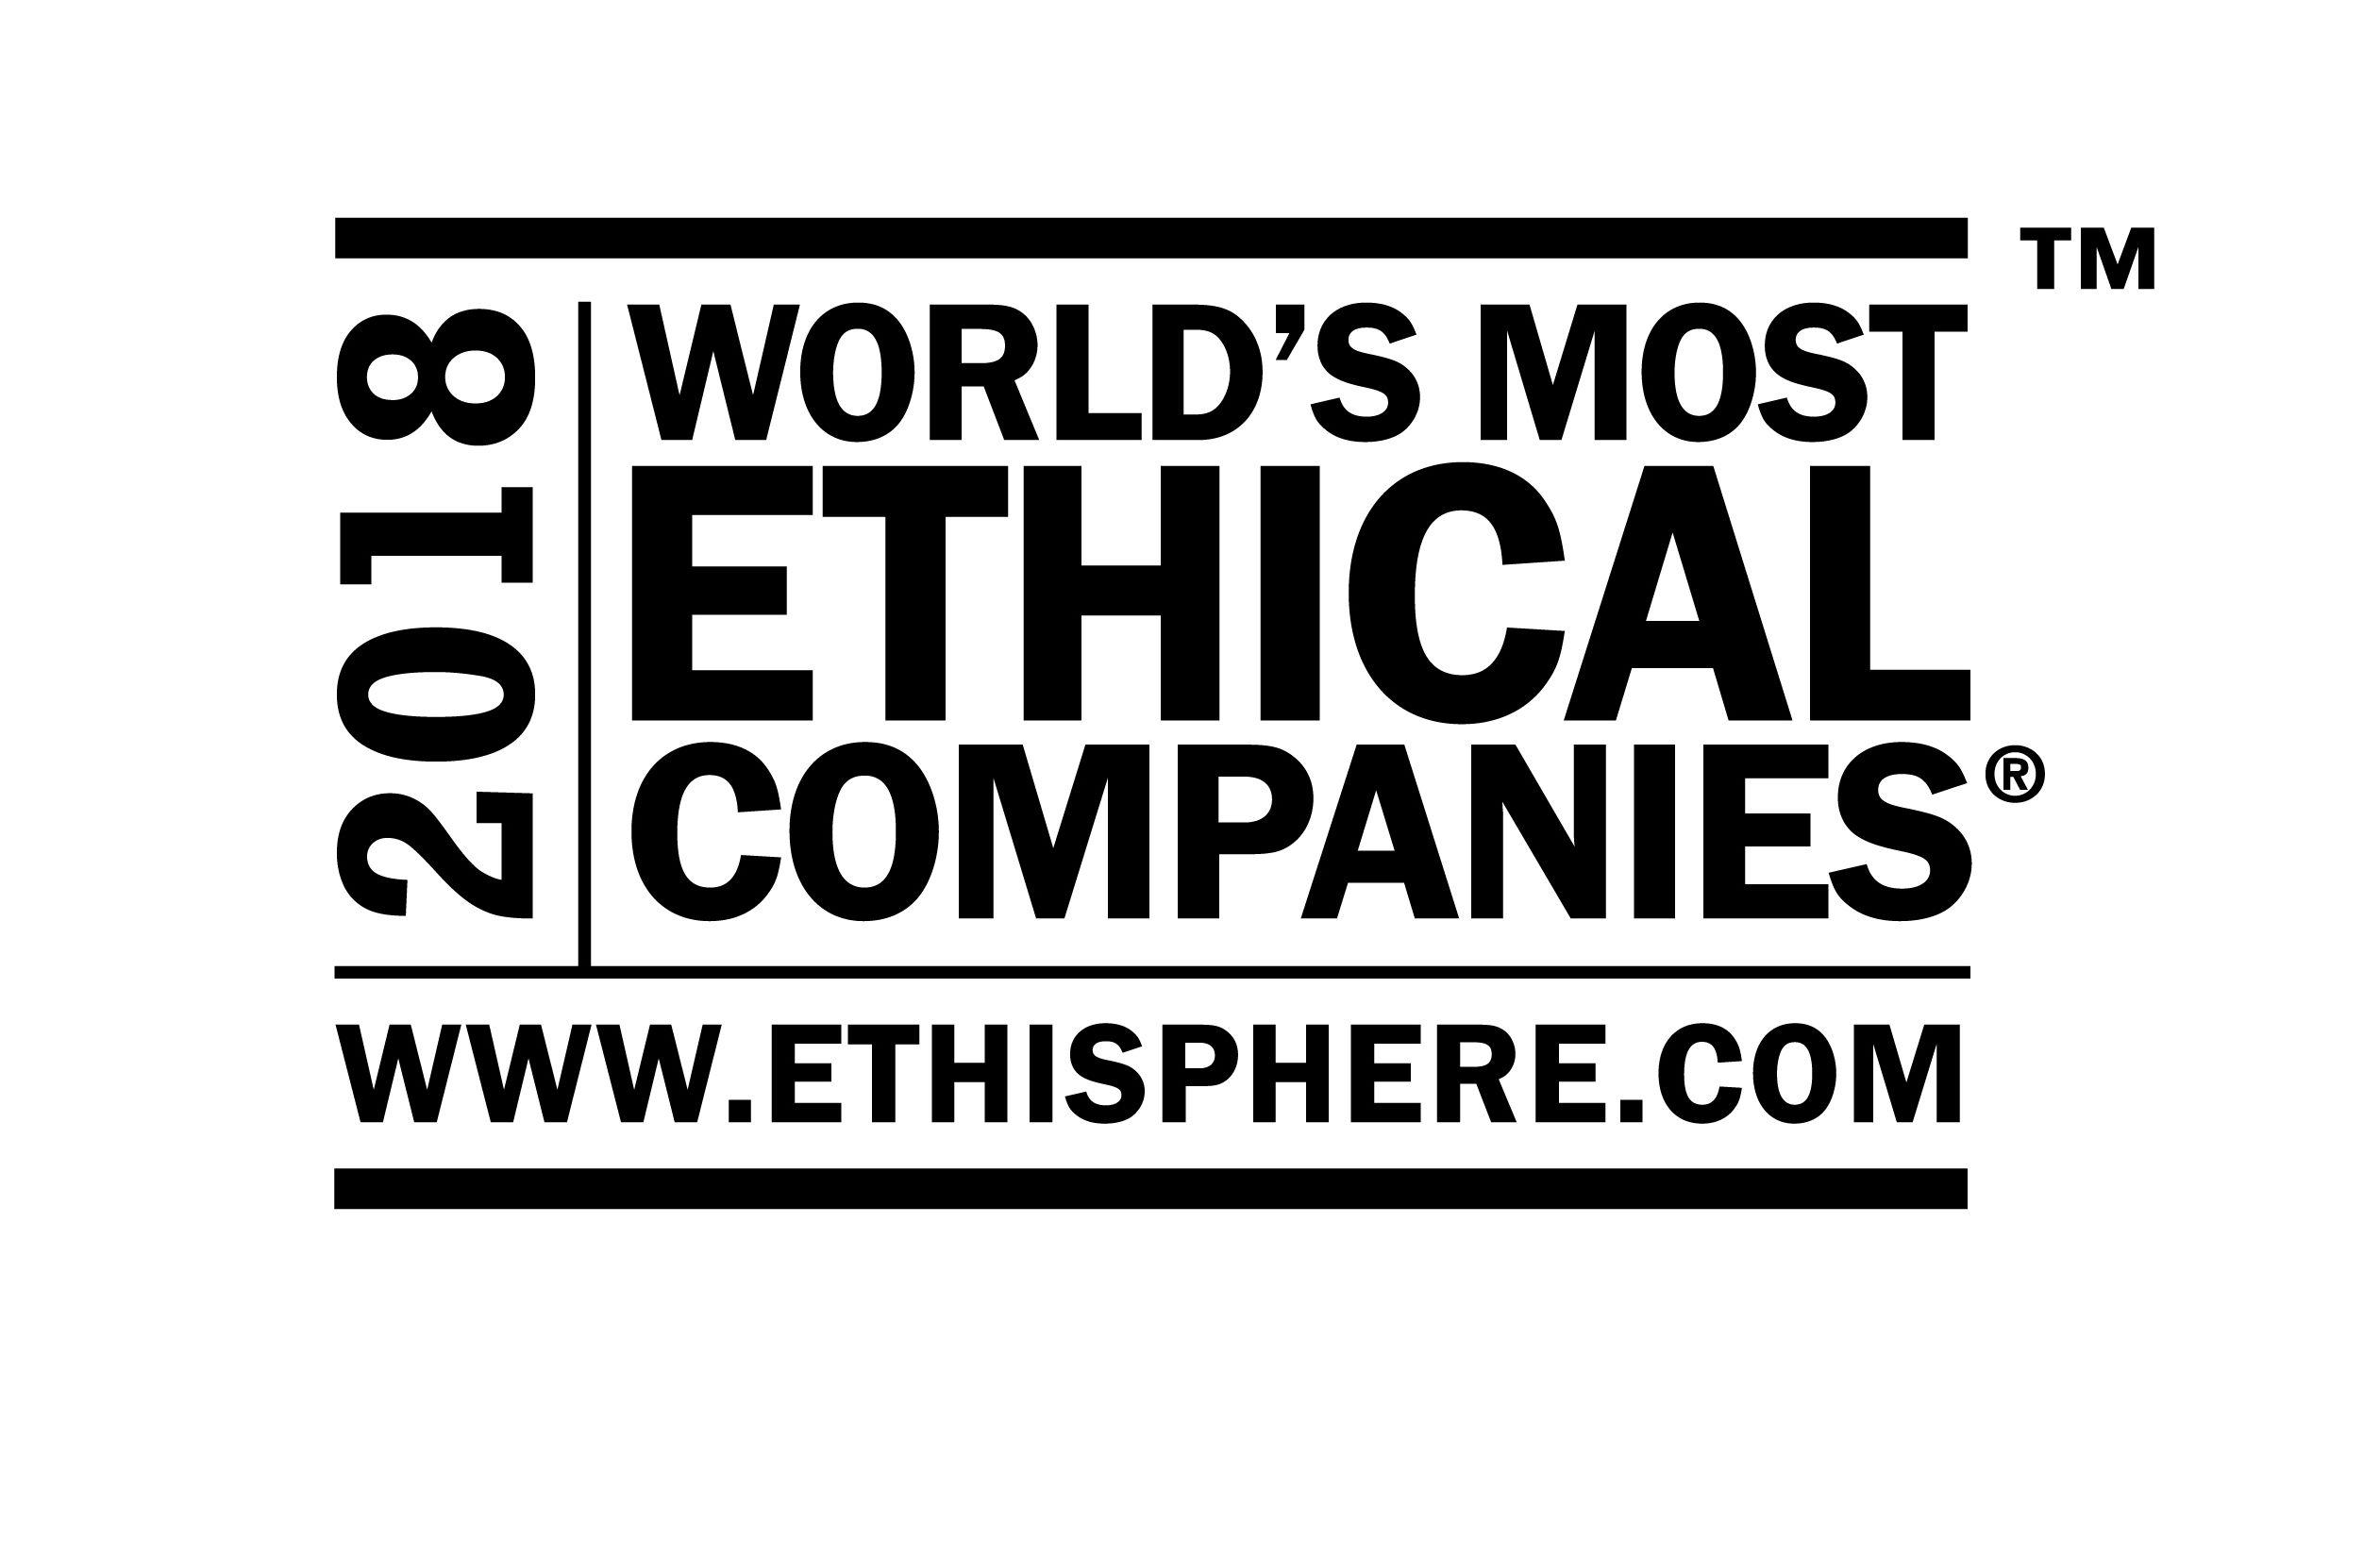 Ethisphere Award Logo - Nokia named one of the World's Most Ethical Companies